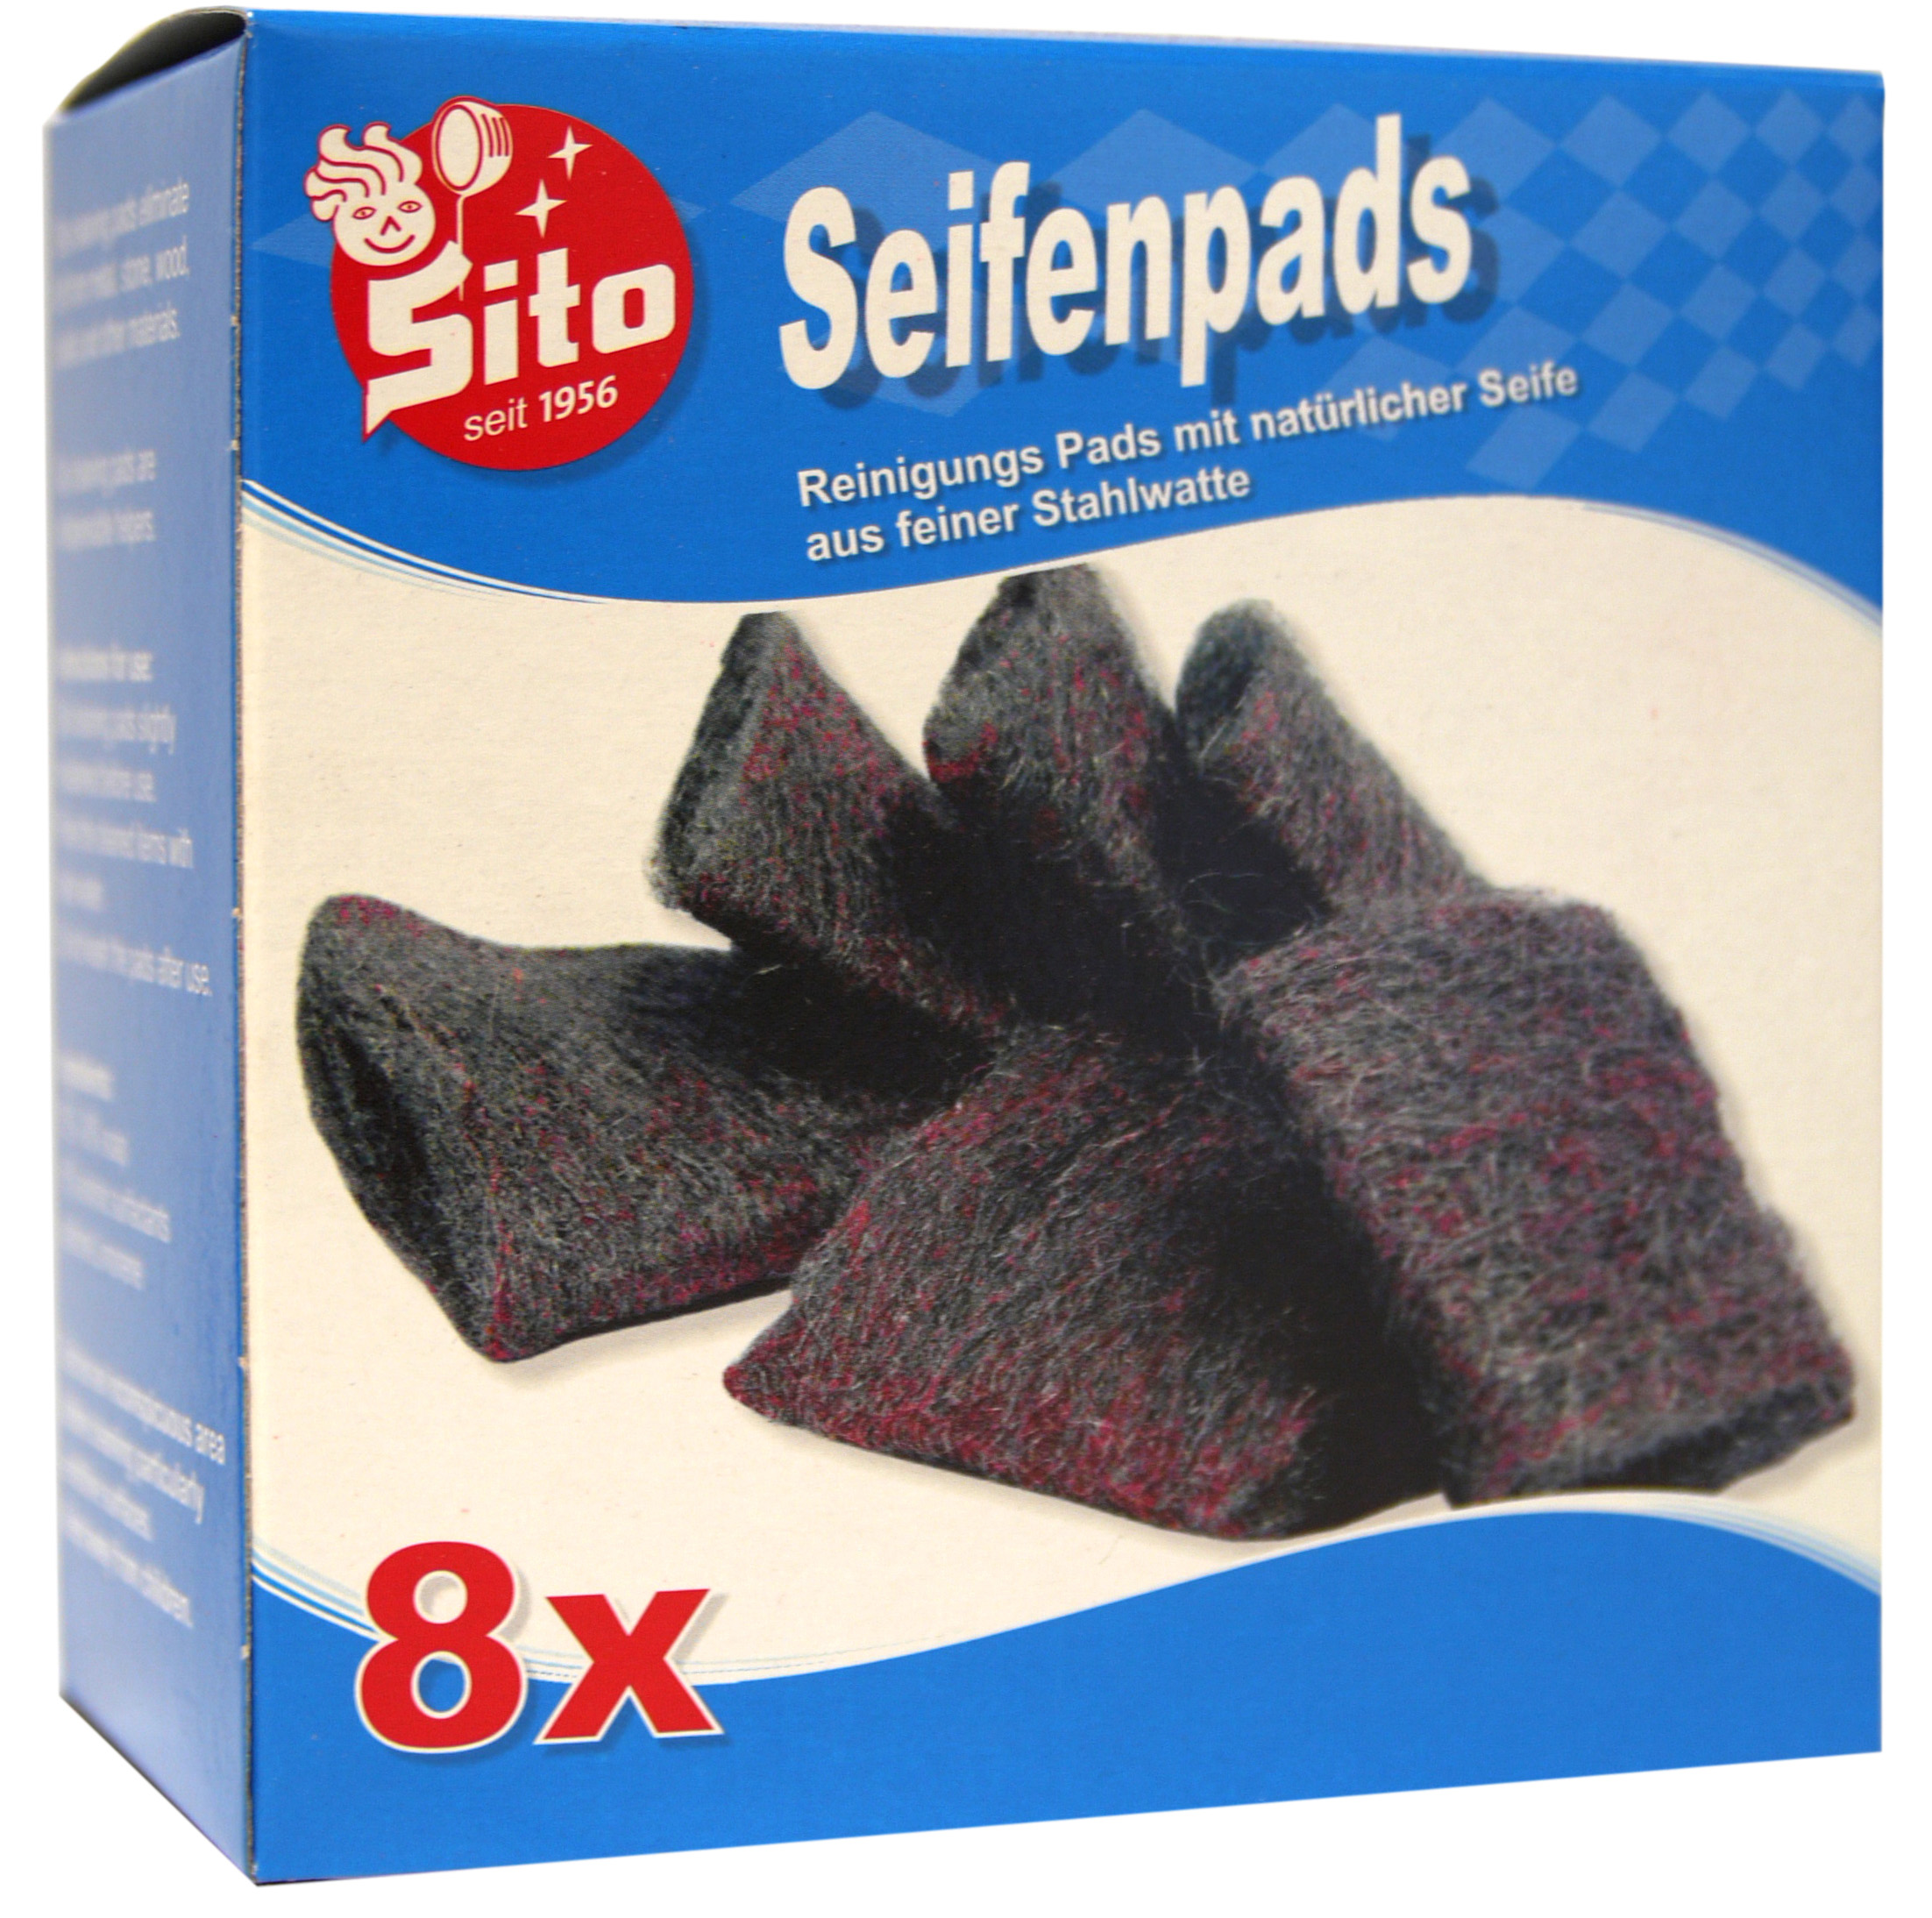 00616 - soap pads, set of 8